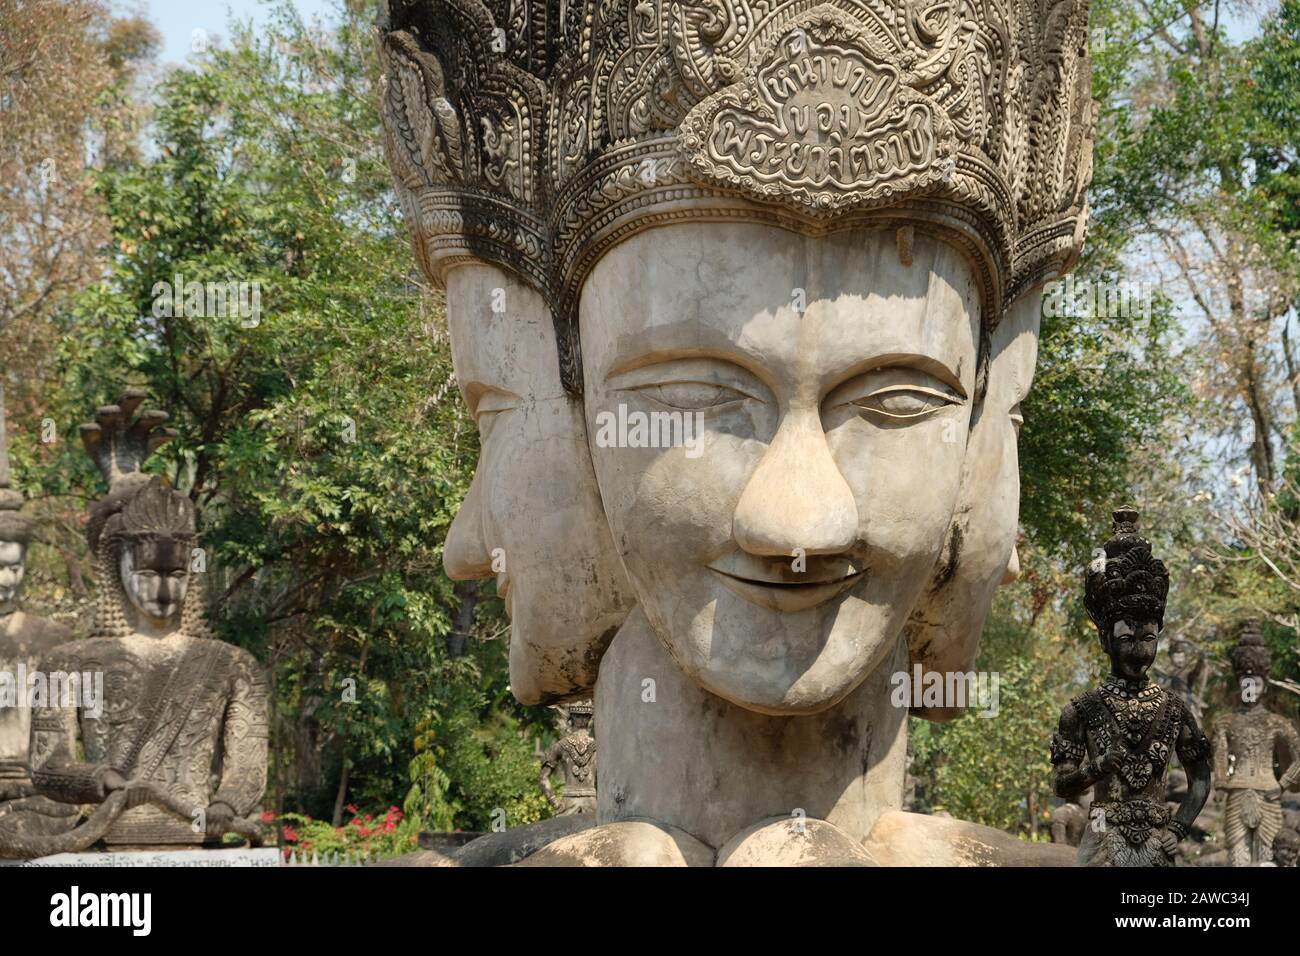 Nong Khai Isan Tailandia - Sala Keoku parque con esculturas budistas de hormigón Foto de stock